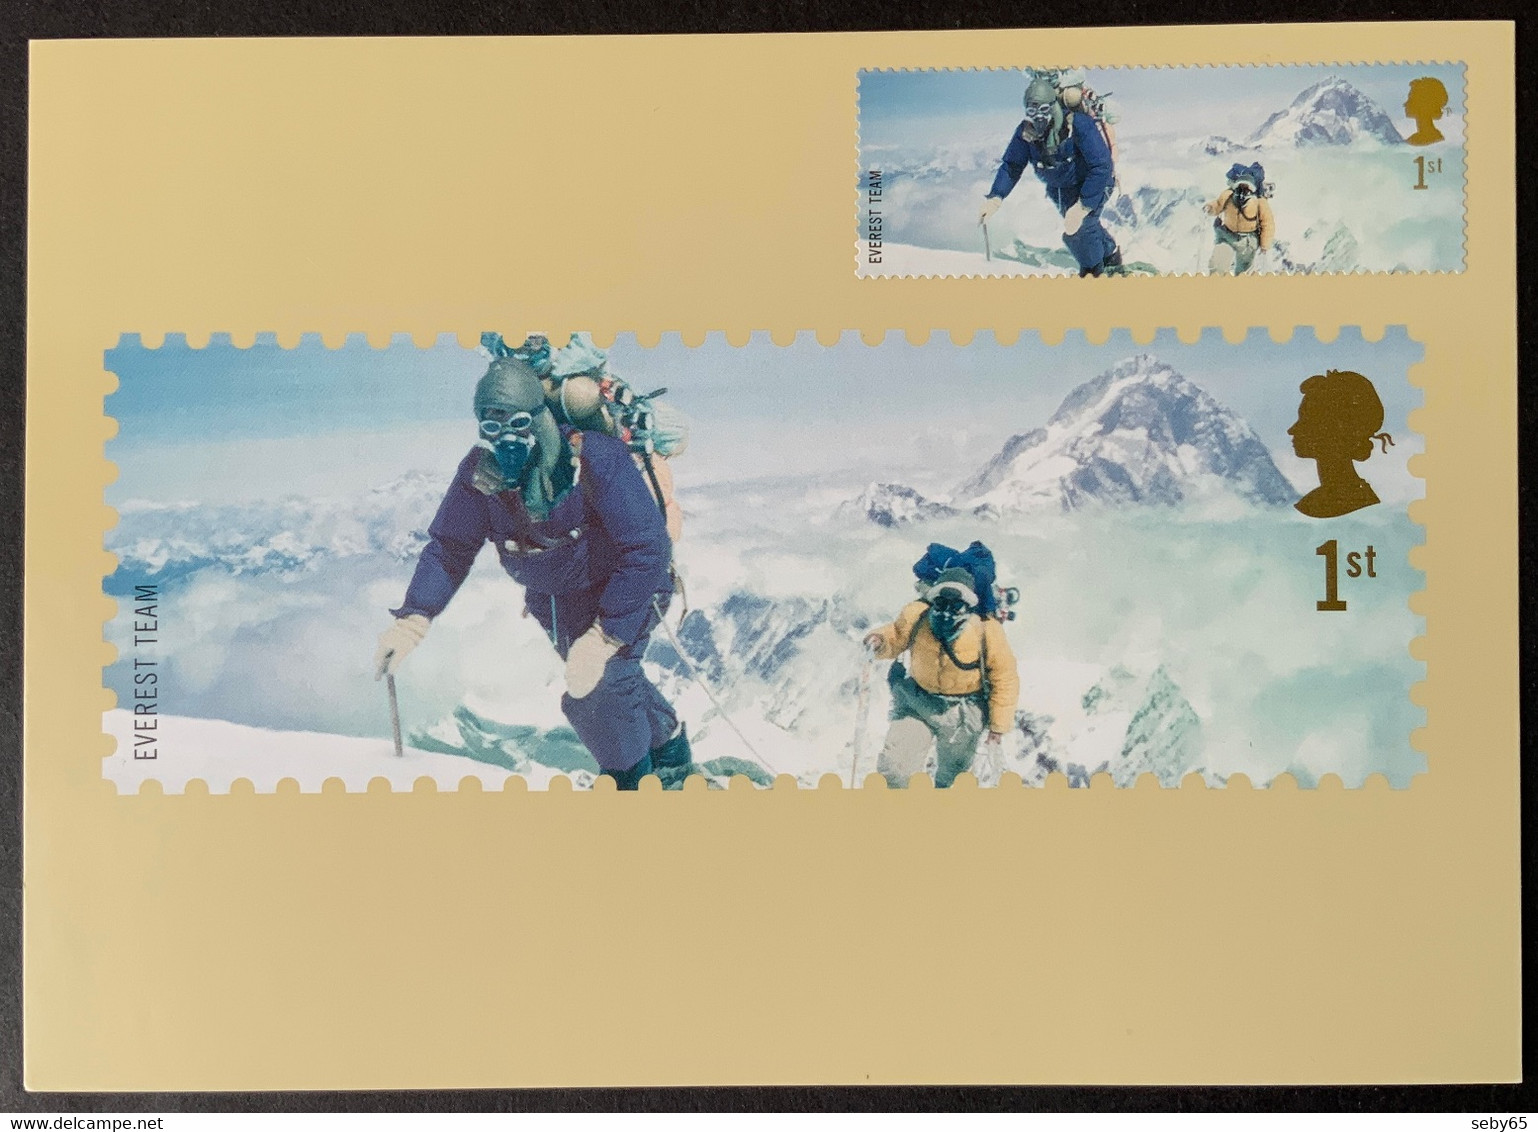 Great Britain 2003 - Extreme Endeavours, Alpinism, Everest, Edmund Percival Hillary, Tenzing, Explorers, Mountains - Maximumkarten (MC)